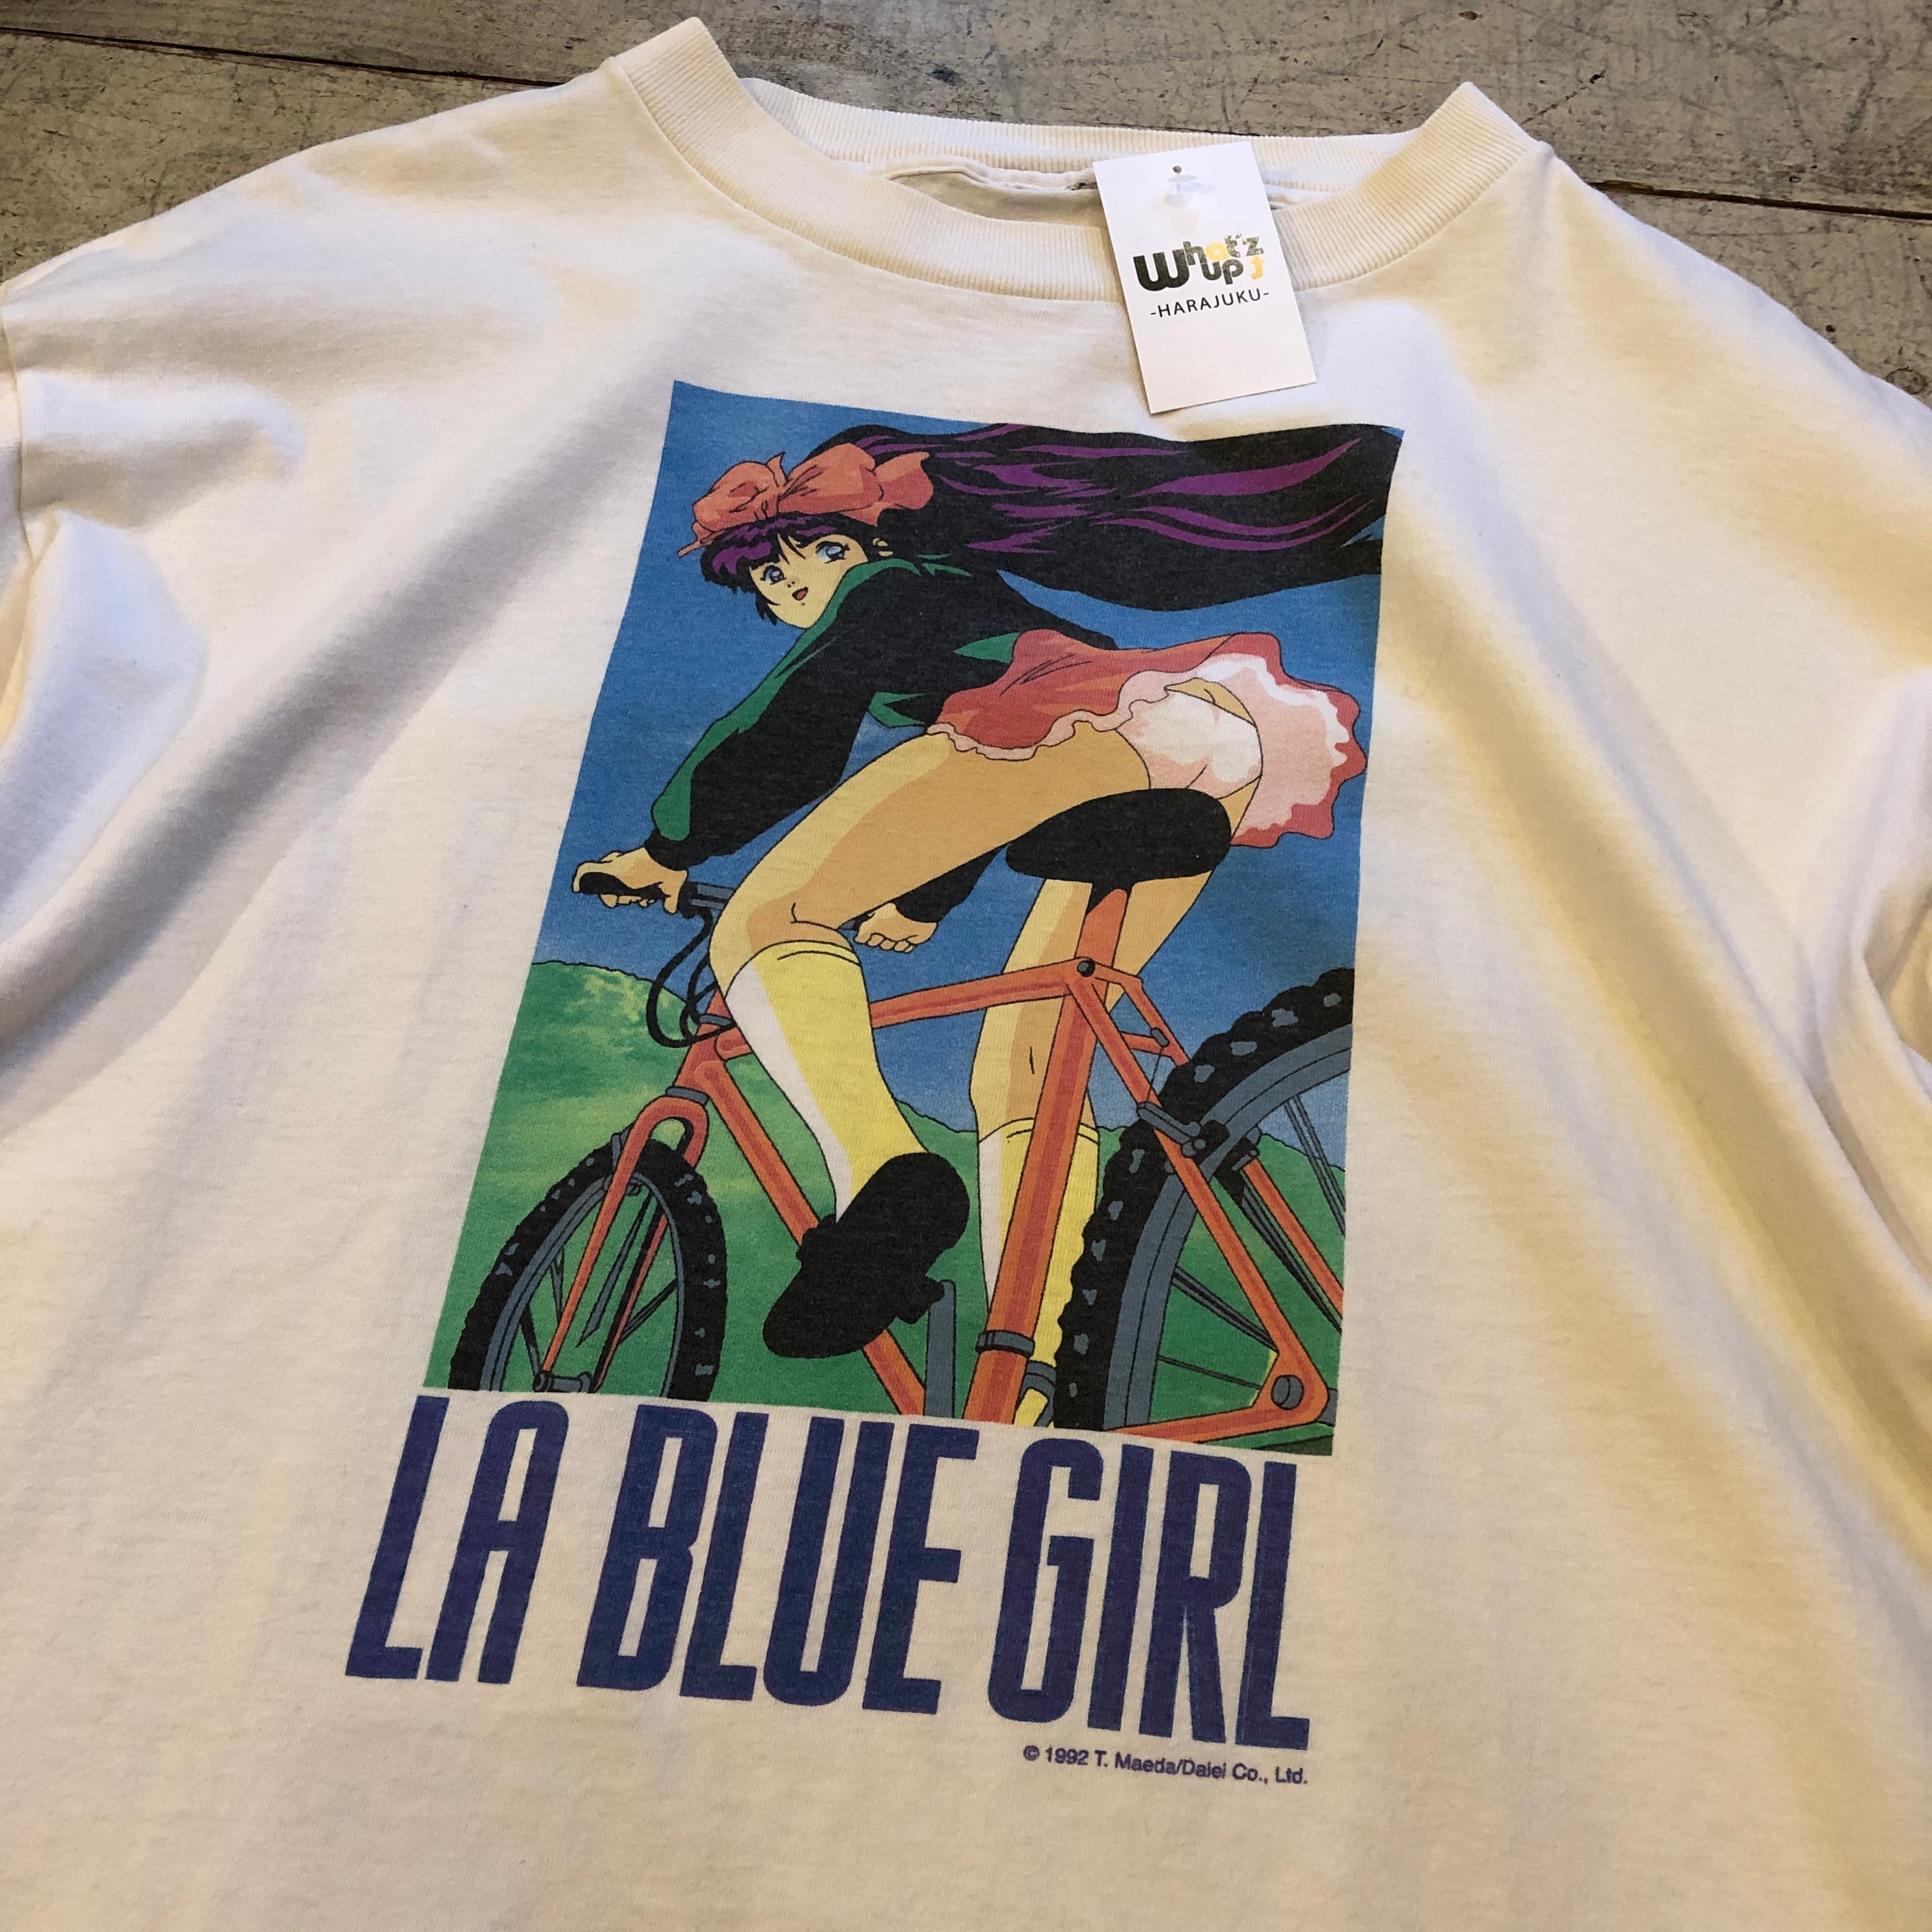 LA BLUE GIRL tシャツ L